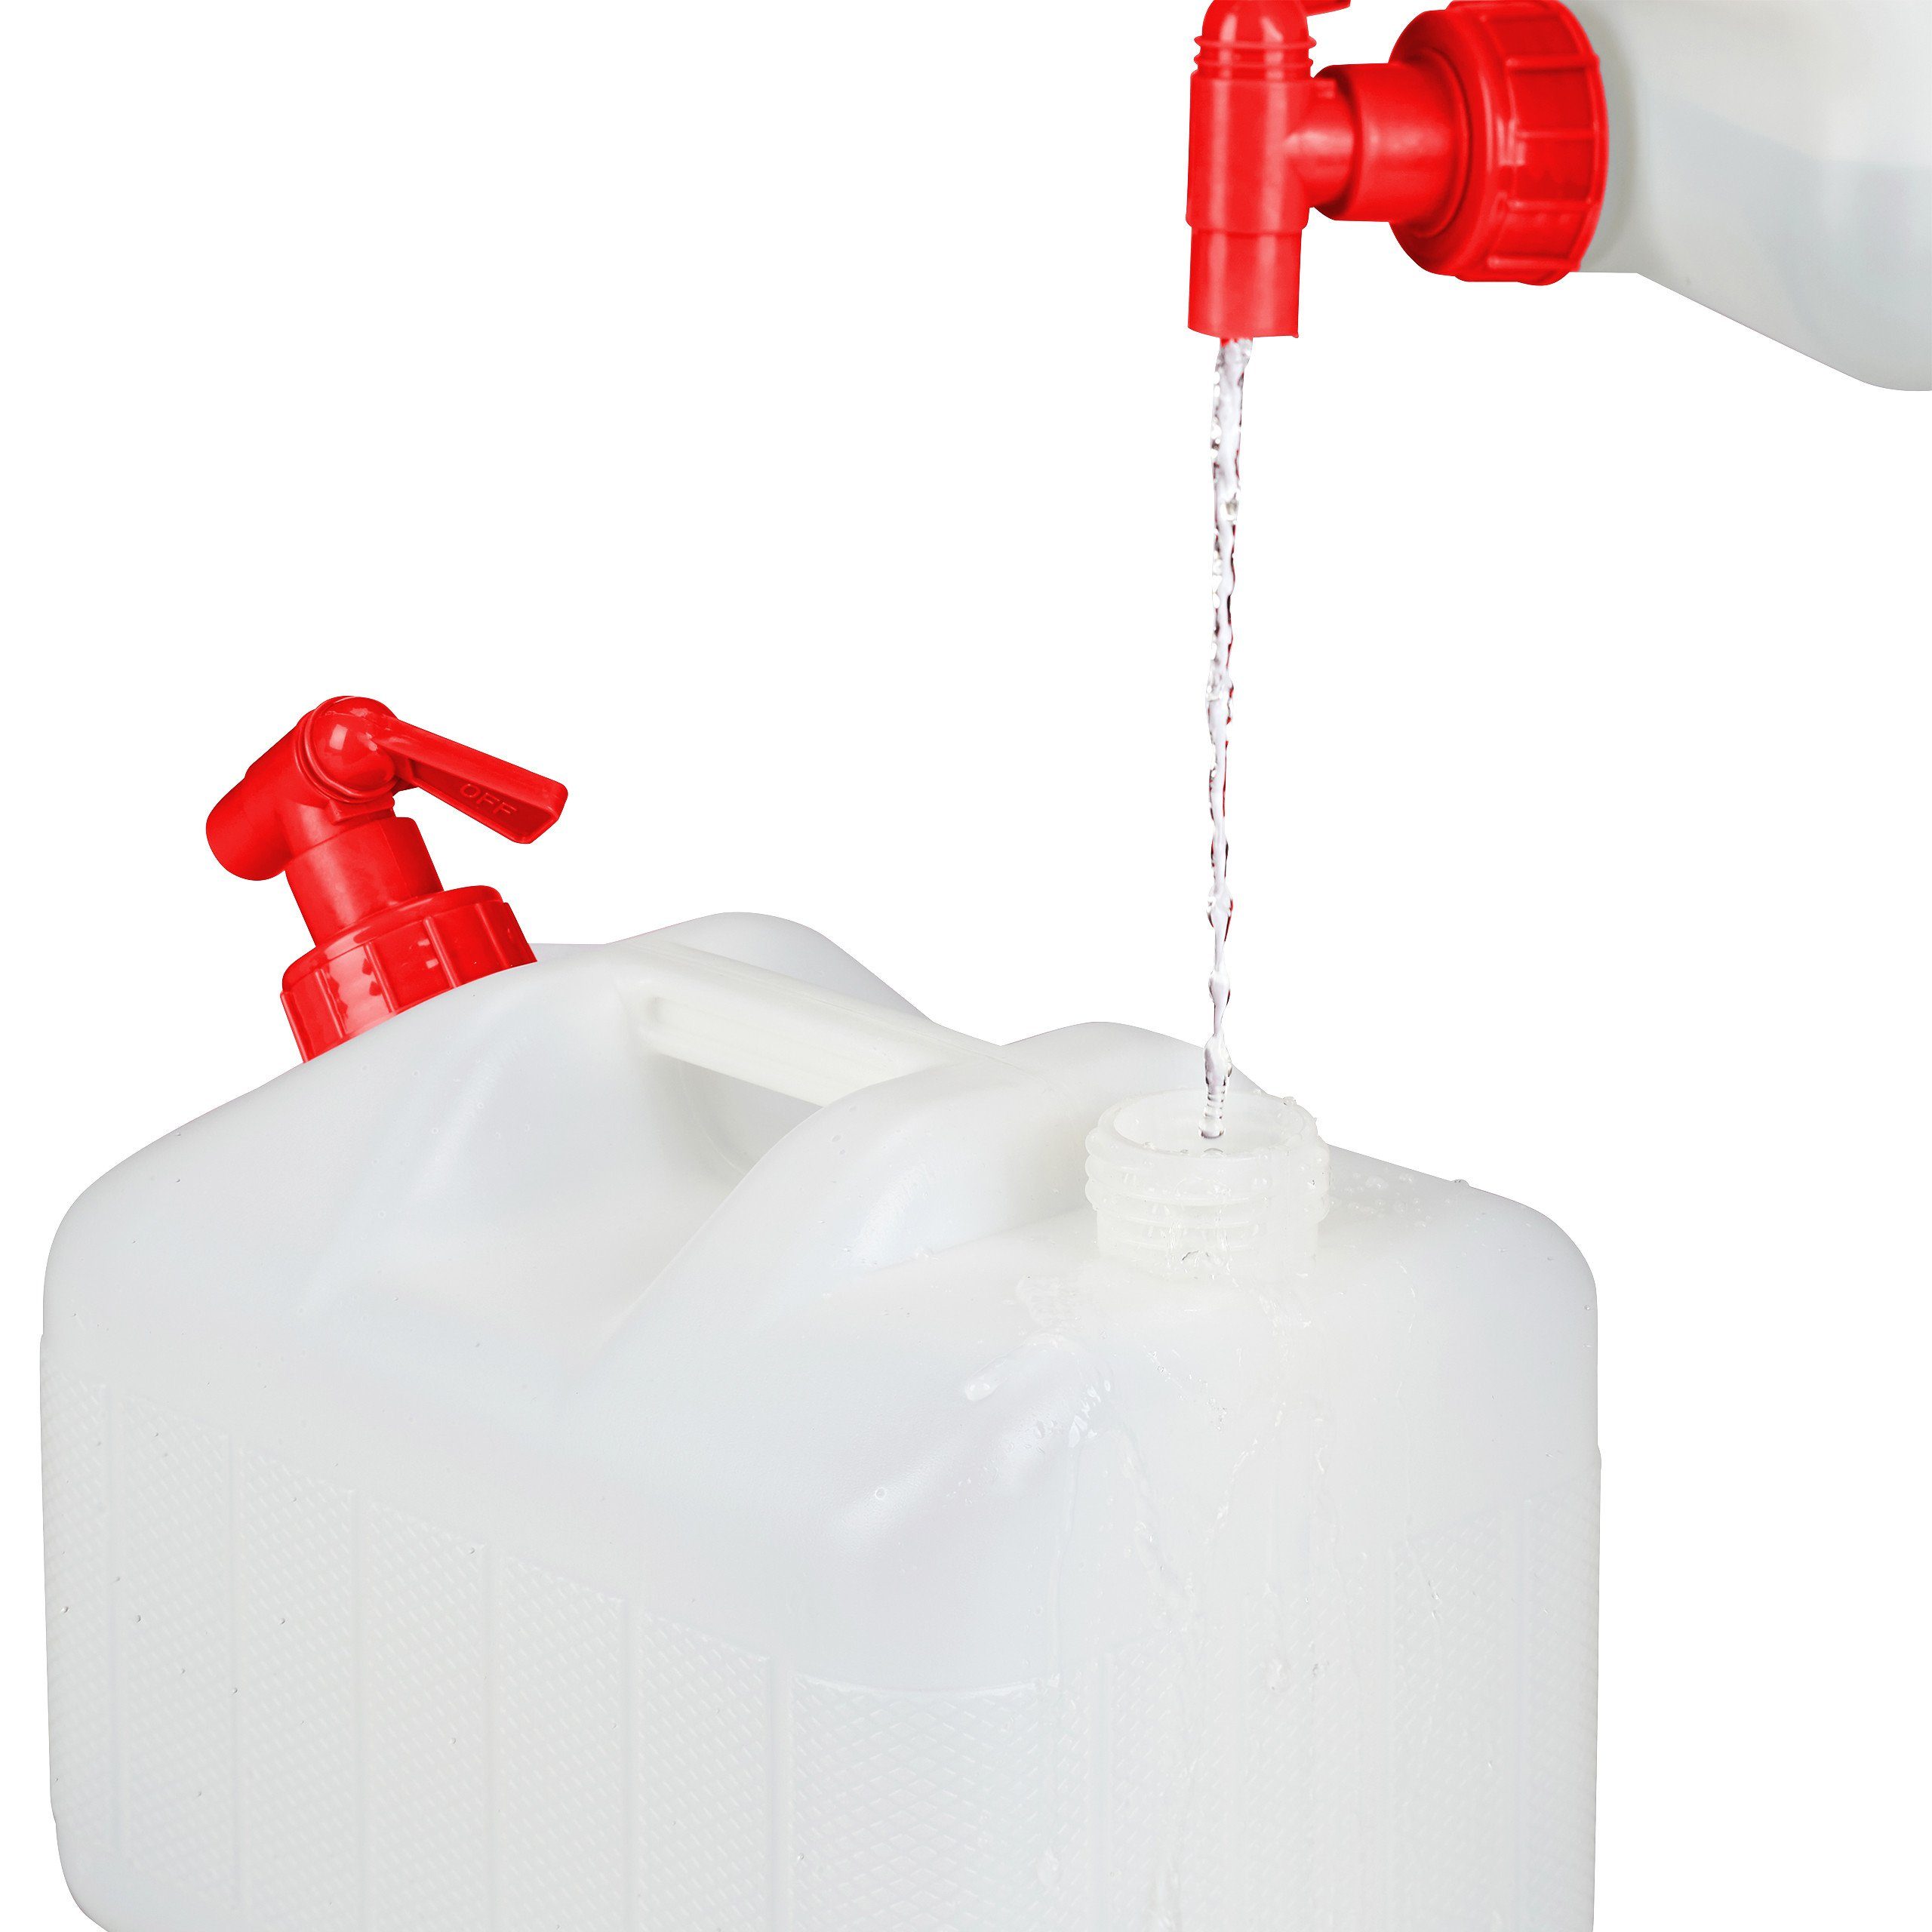 relaxdays Kanister Wasserkanister 10 Liter mit Hahn